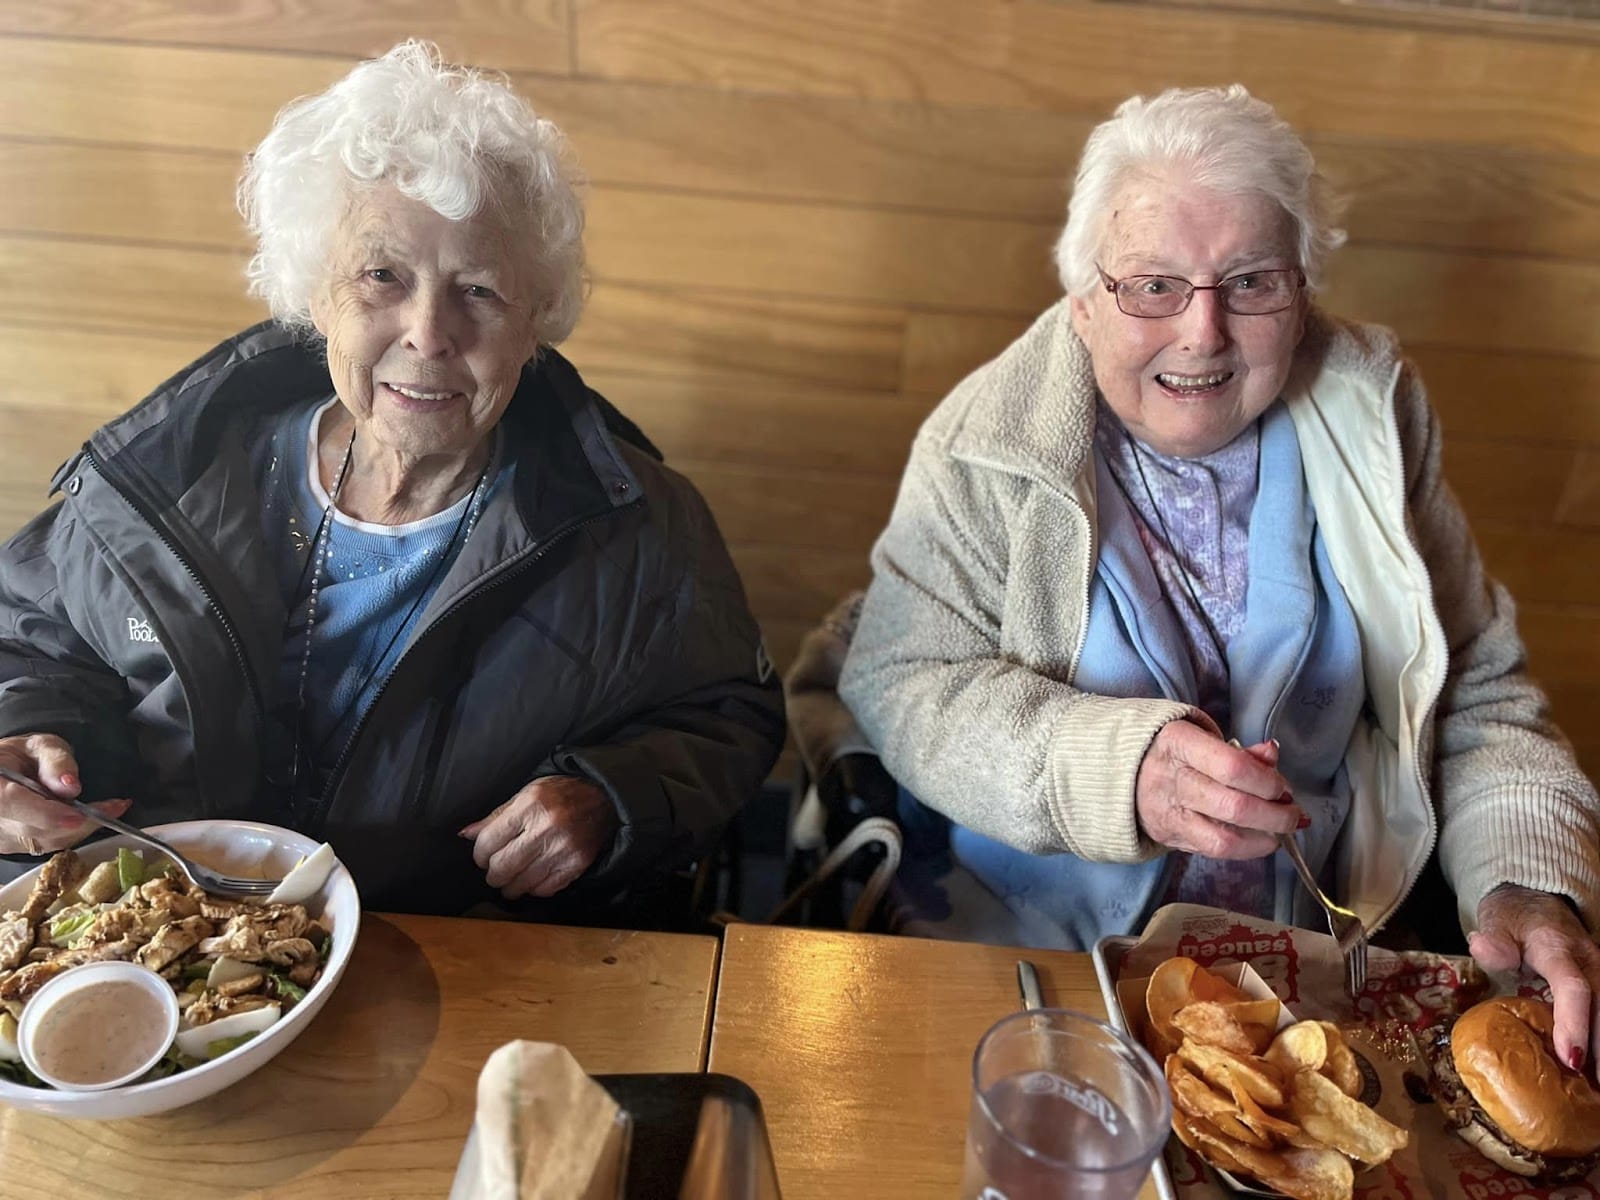 Two elderly women enjoying a delicious meal